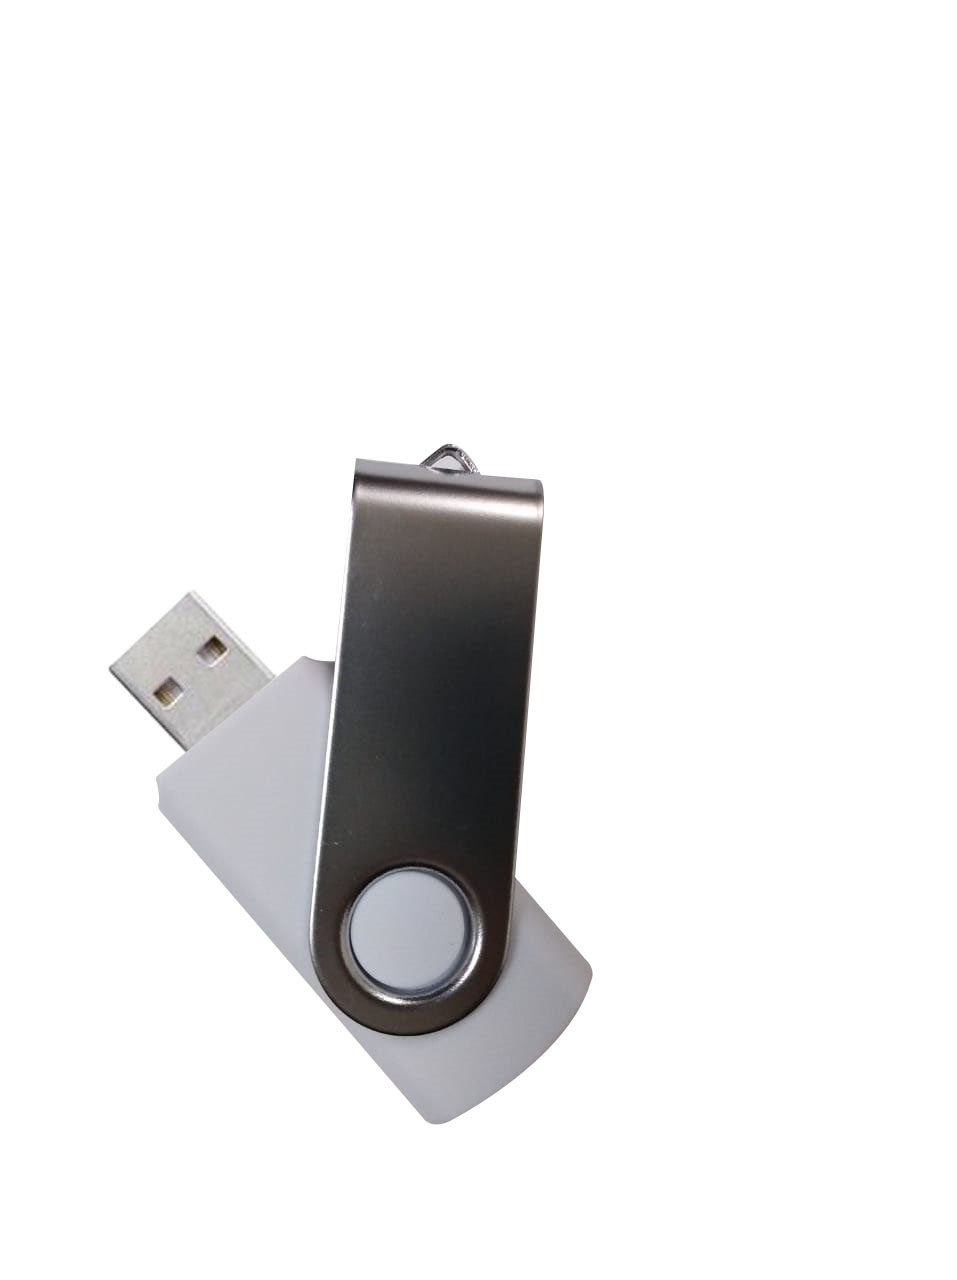 USB-BA-001 16, USB GIRATORIA 16GB